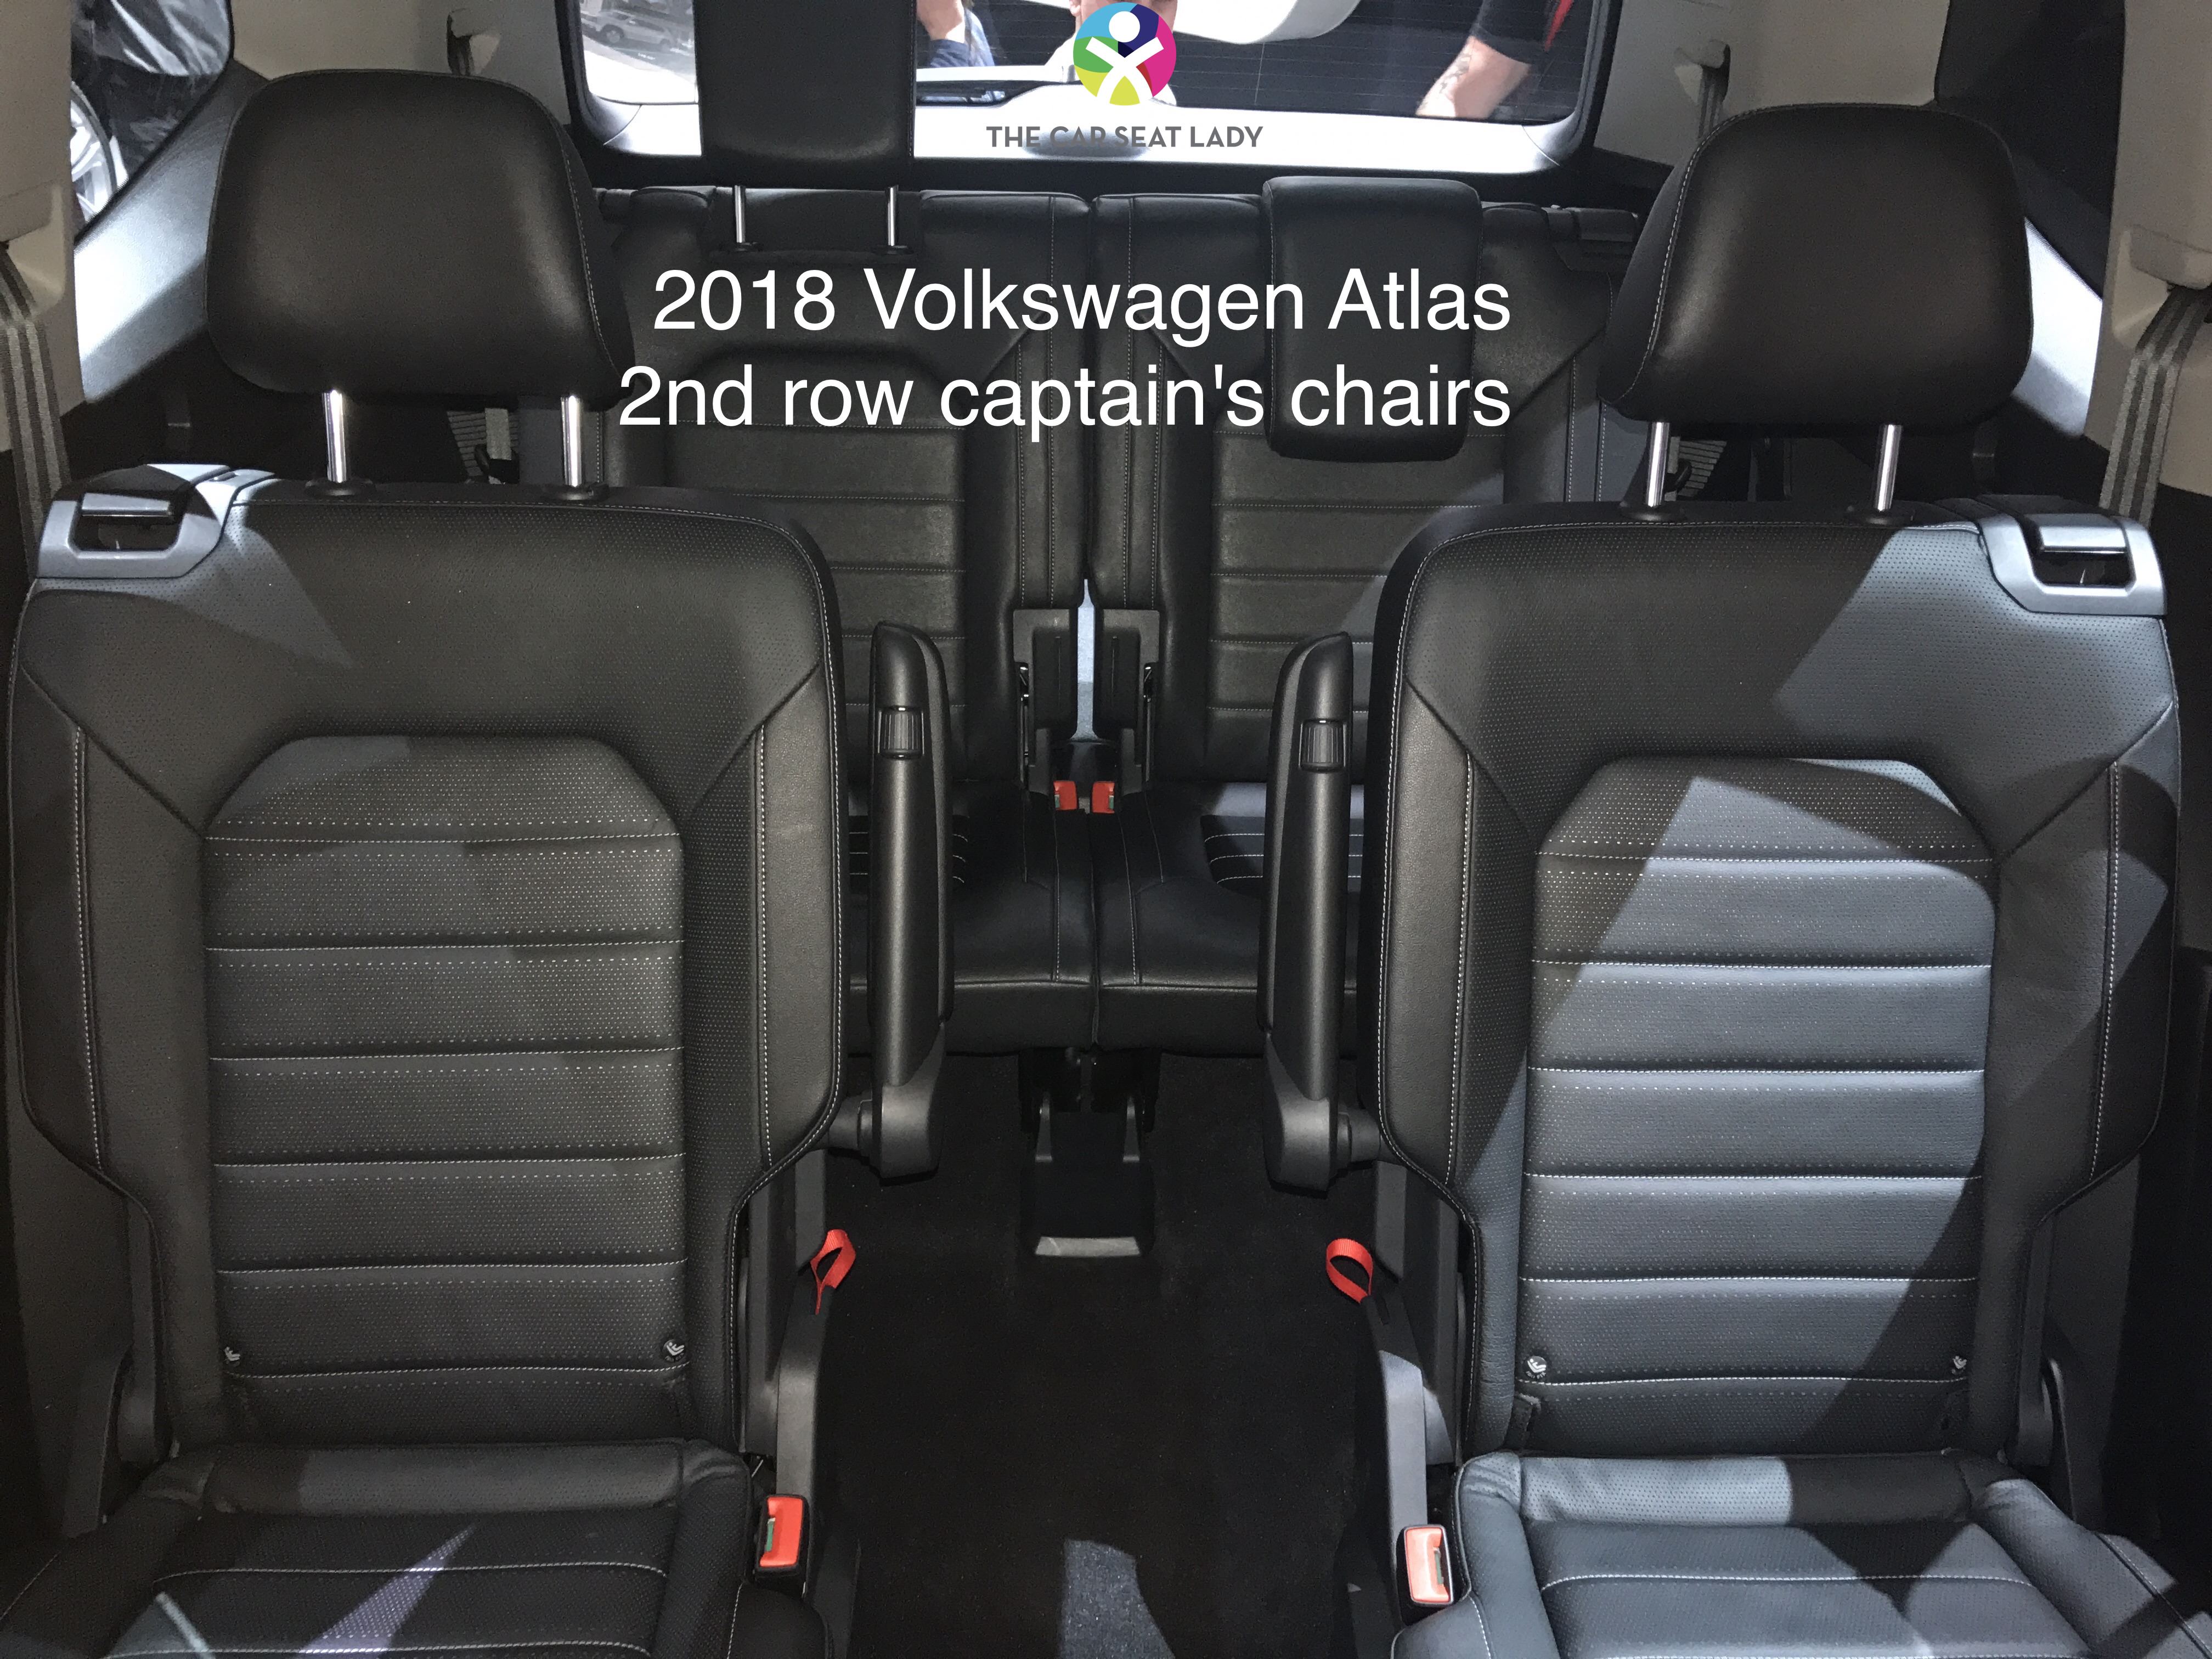 The Car Seat Ladyvolkswagen Atlas The Car Seat Lady